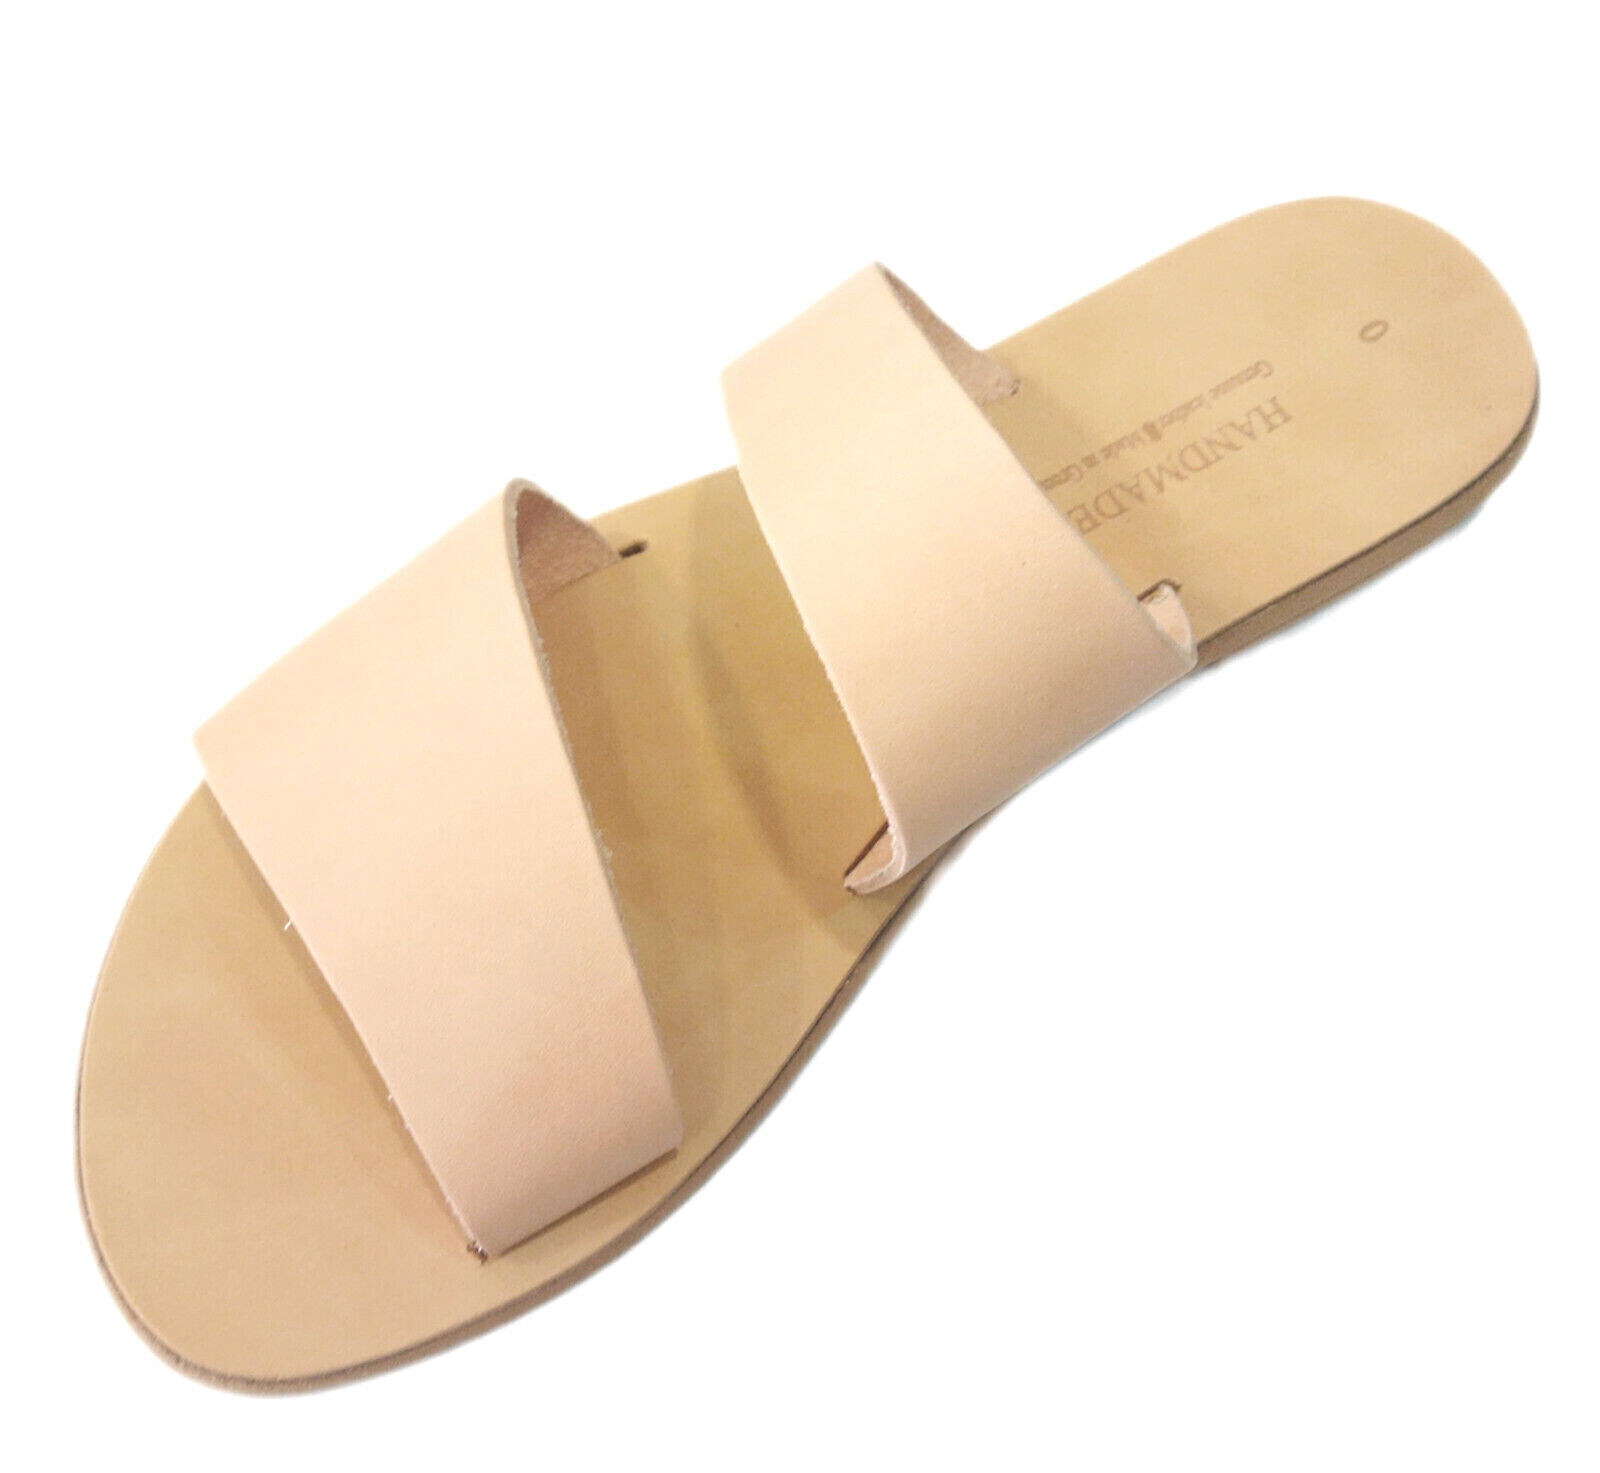 1050 greek handmade leather sandals